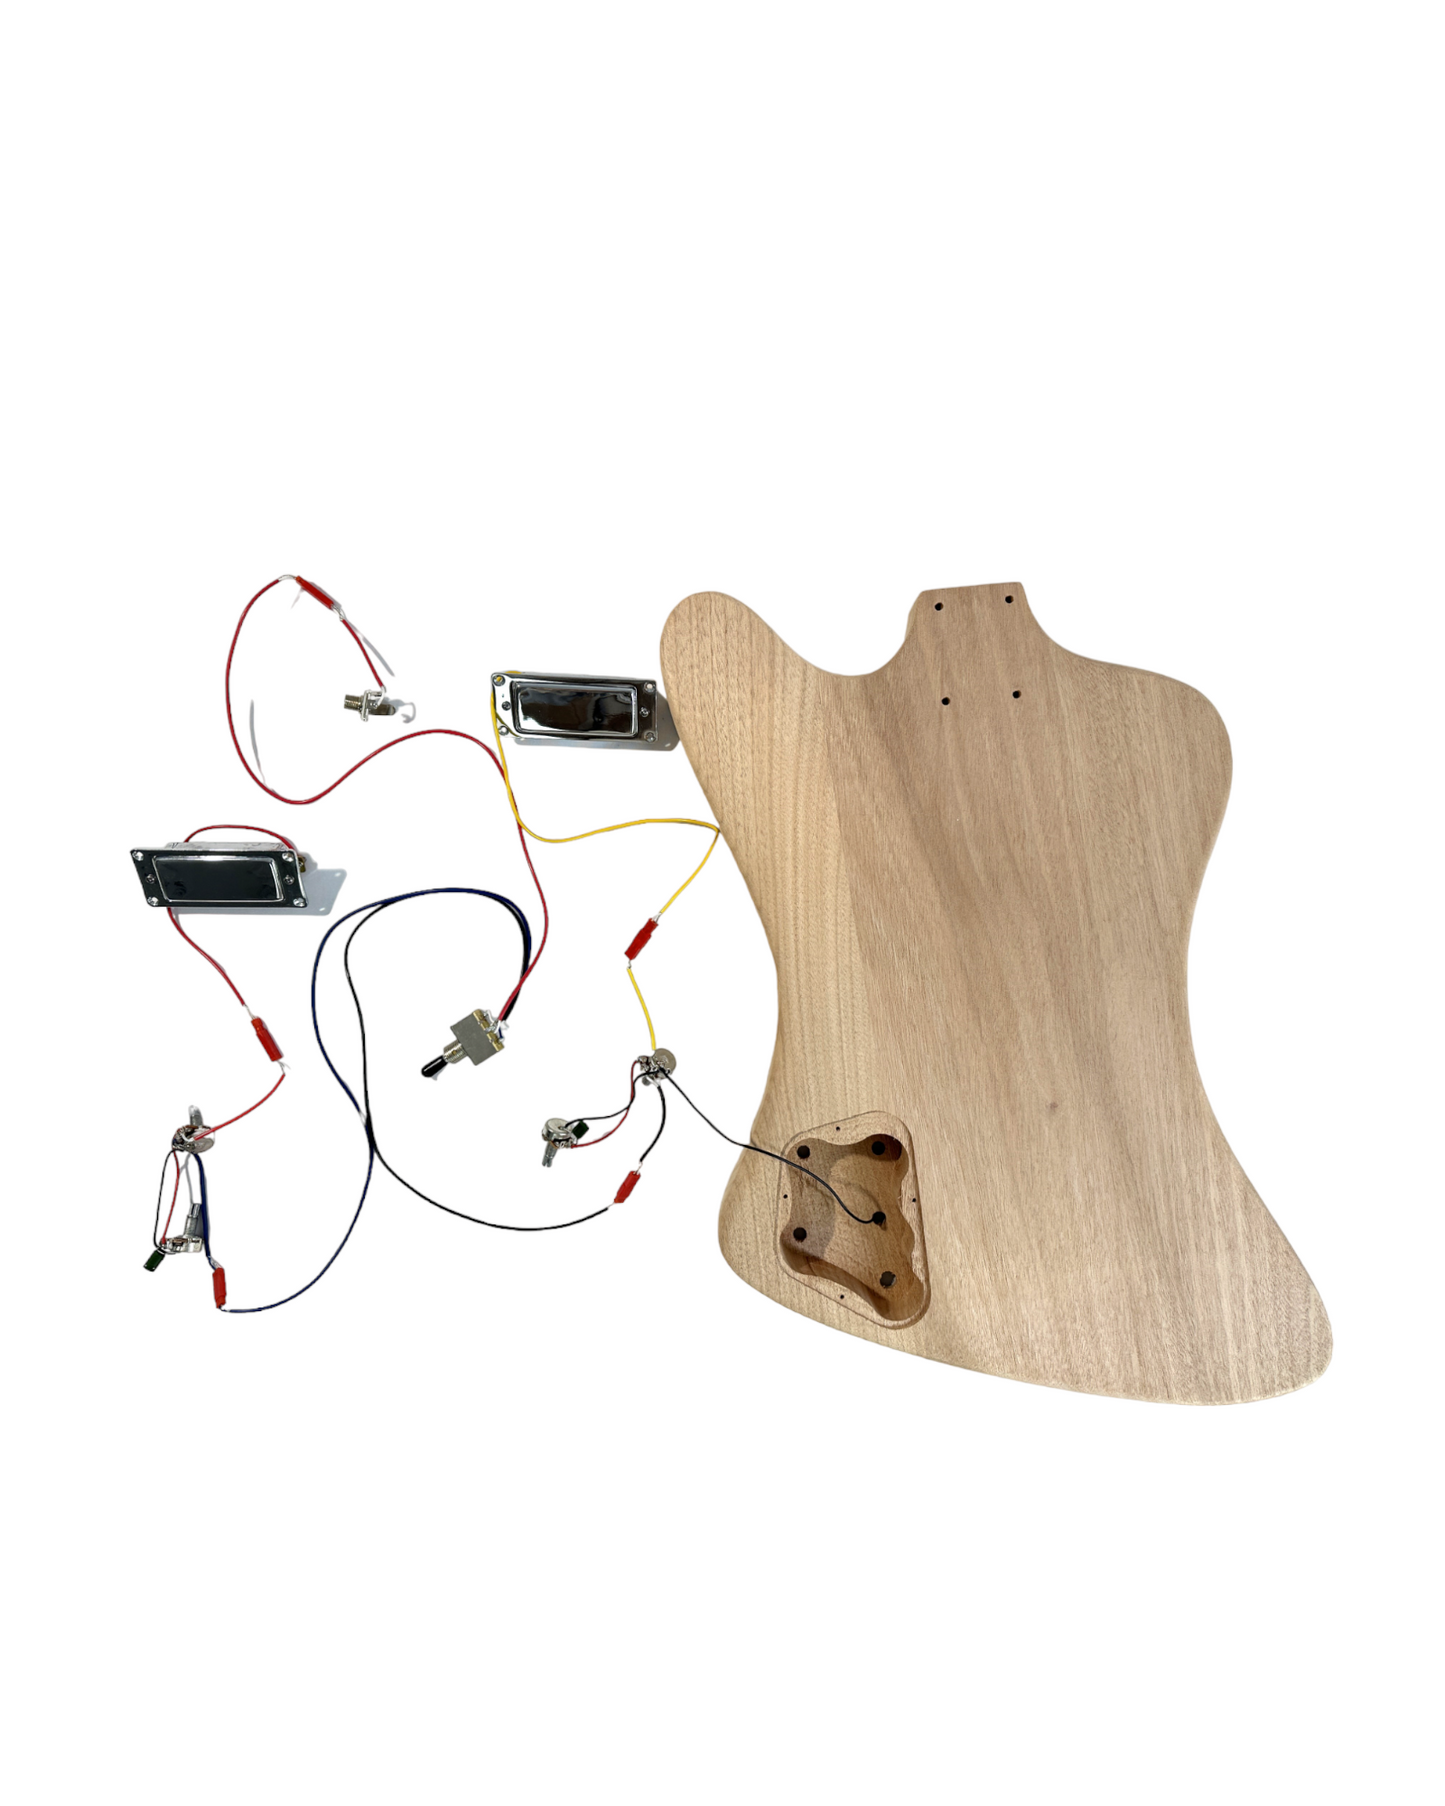 HSFB1930MDIY Solid Mahogany Body Electric Guitar DIY Kit, Tuner, 3 picks, No-Soldering, H-H